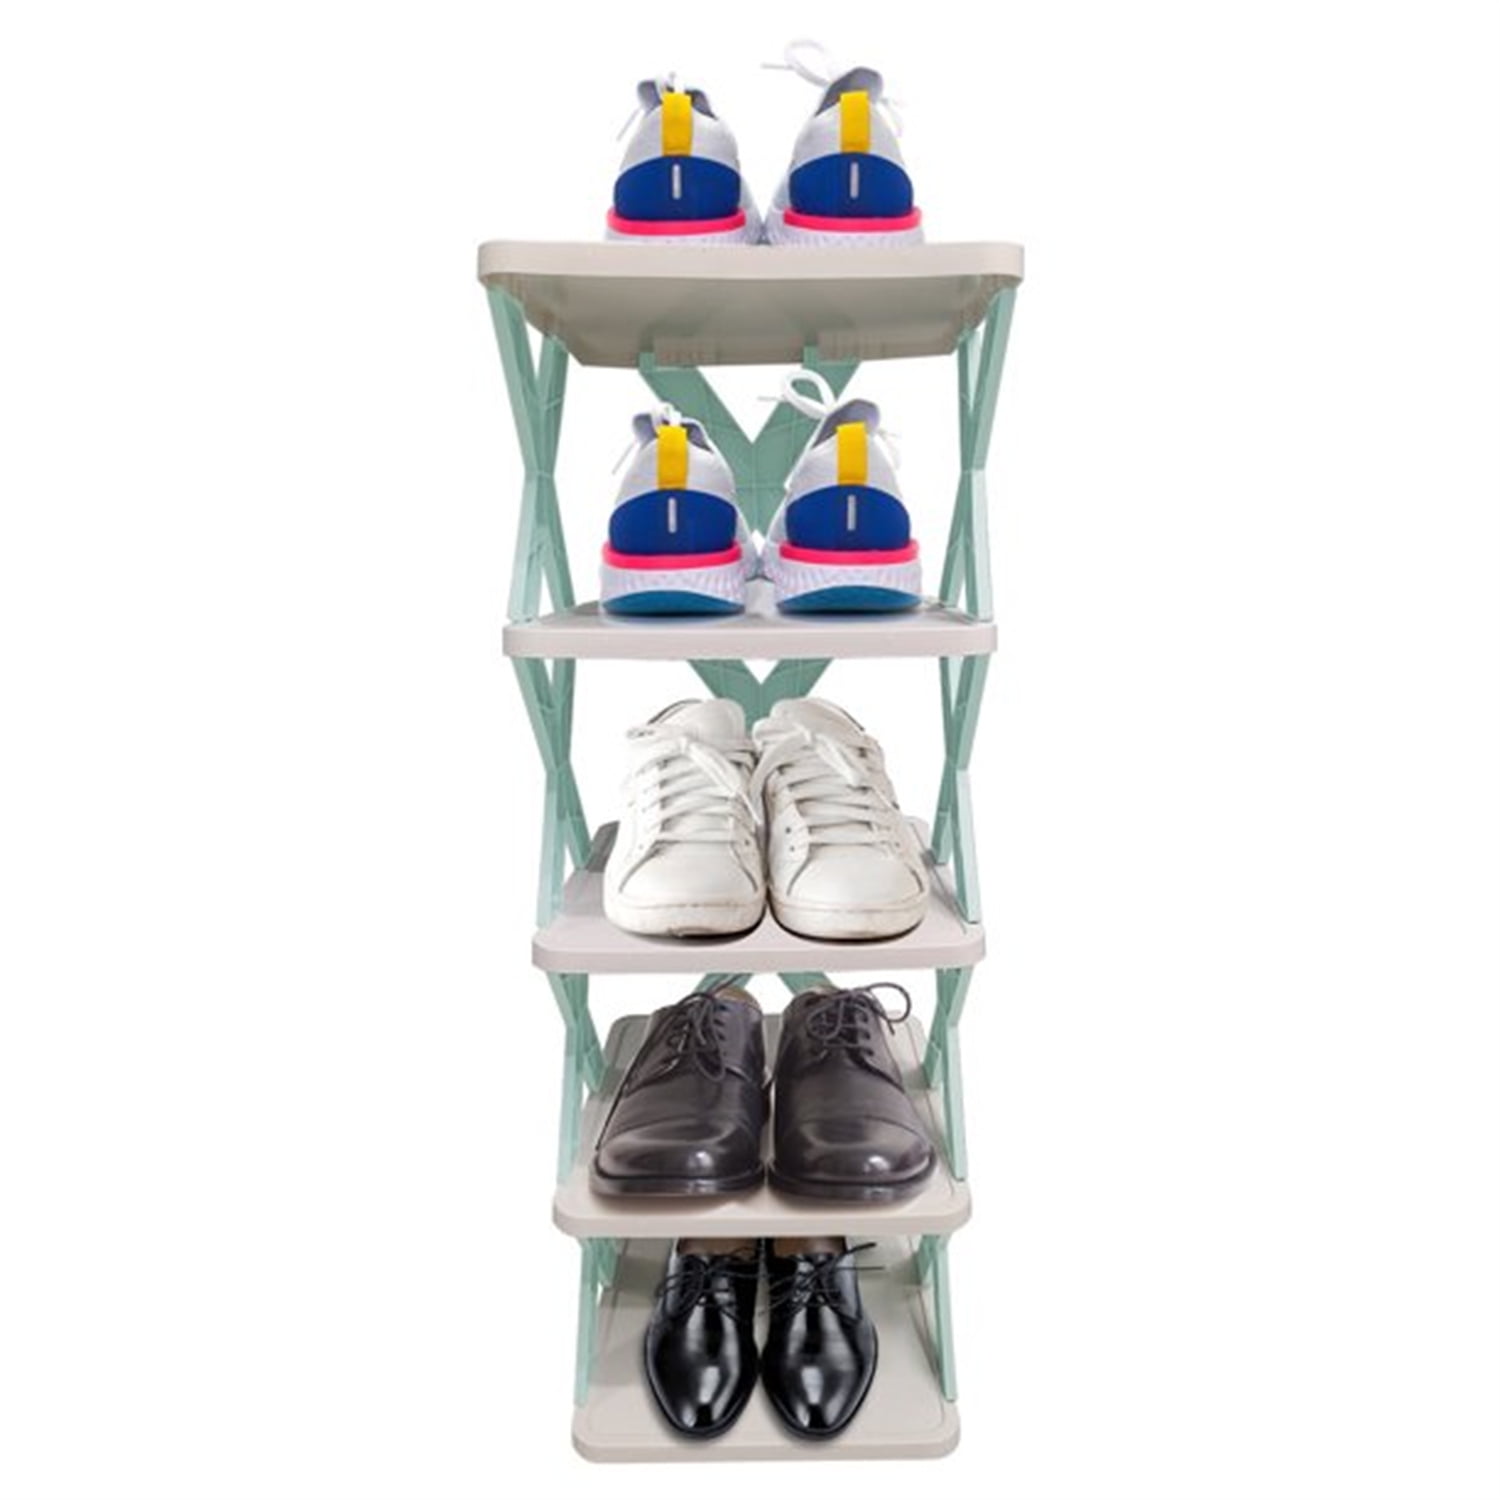 Flexible Combination Shoe Rack For Entryway, Black Shoe Organizer For  Closet, Free Standing Small Shoe Shelf For Women Kids, Plastic Stackable  Shoe Storage Tower , Narrow Shoe Stand Stacker Slots